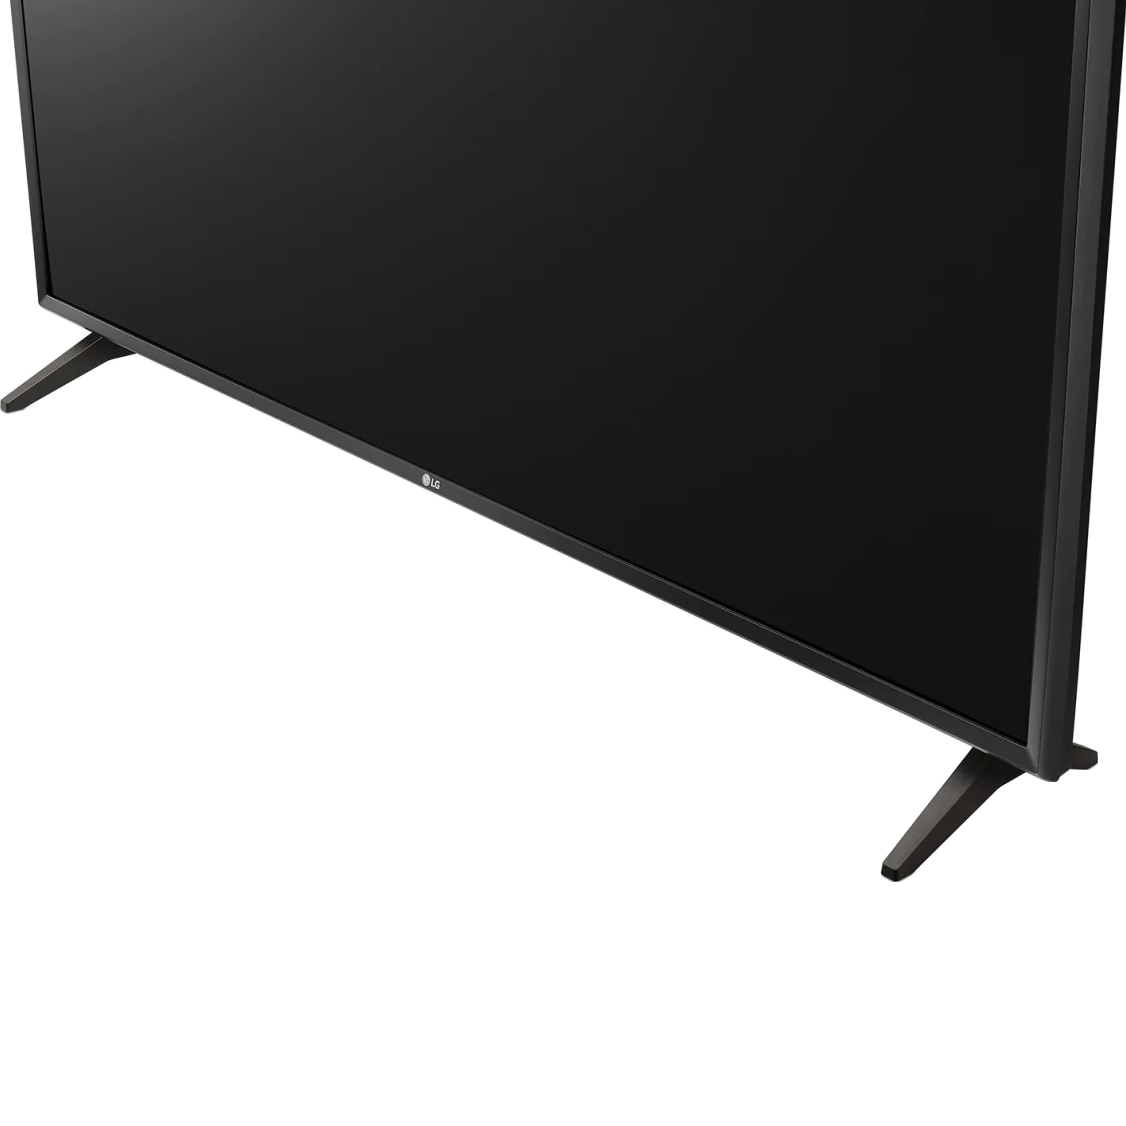 Телевизор LG 43LM5772PLA, цвет черный - фото 6